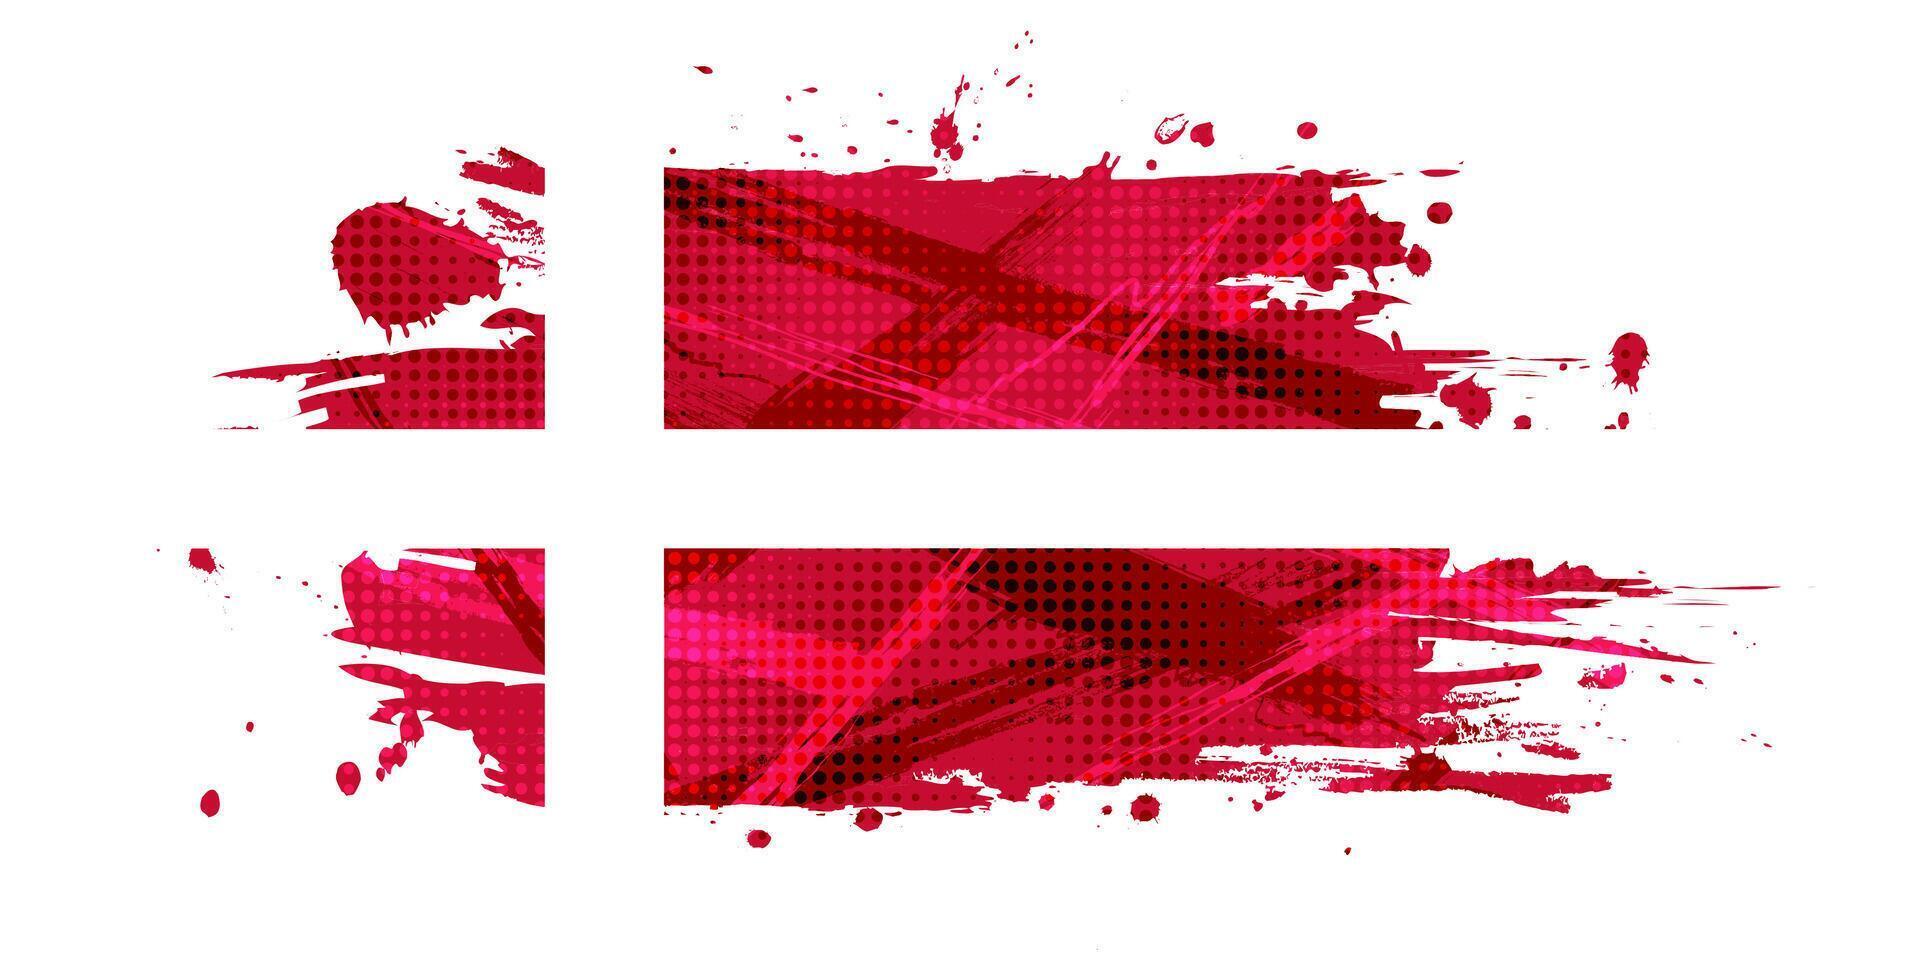 nationell flagga av Danmark med borsta måla stil och halvton effekt. dansk flagga bakgrund med grunge begrepp vektor